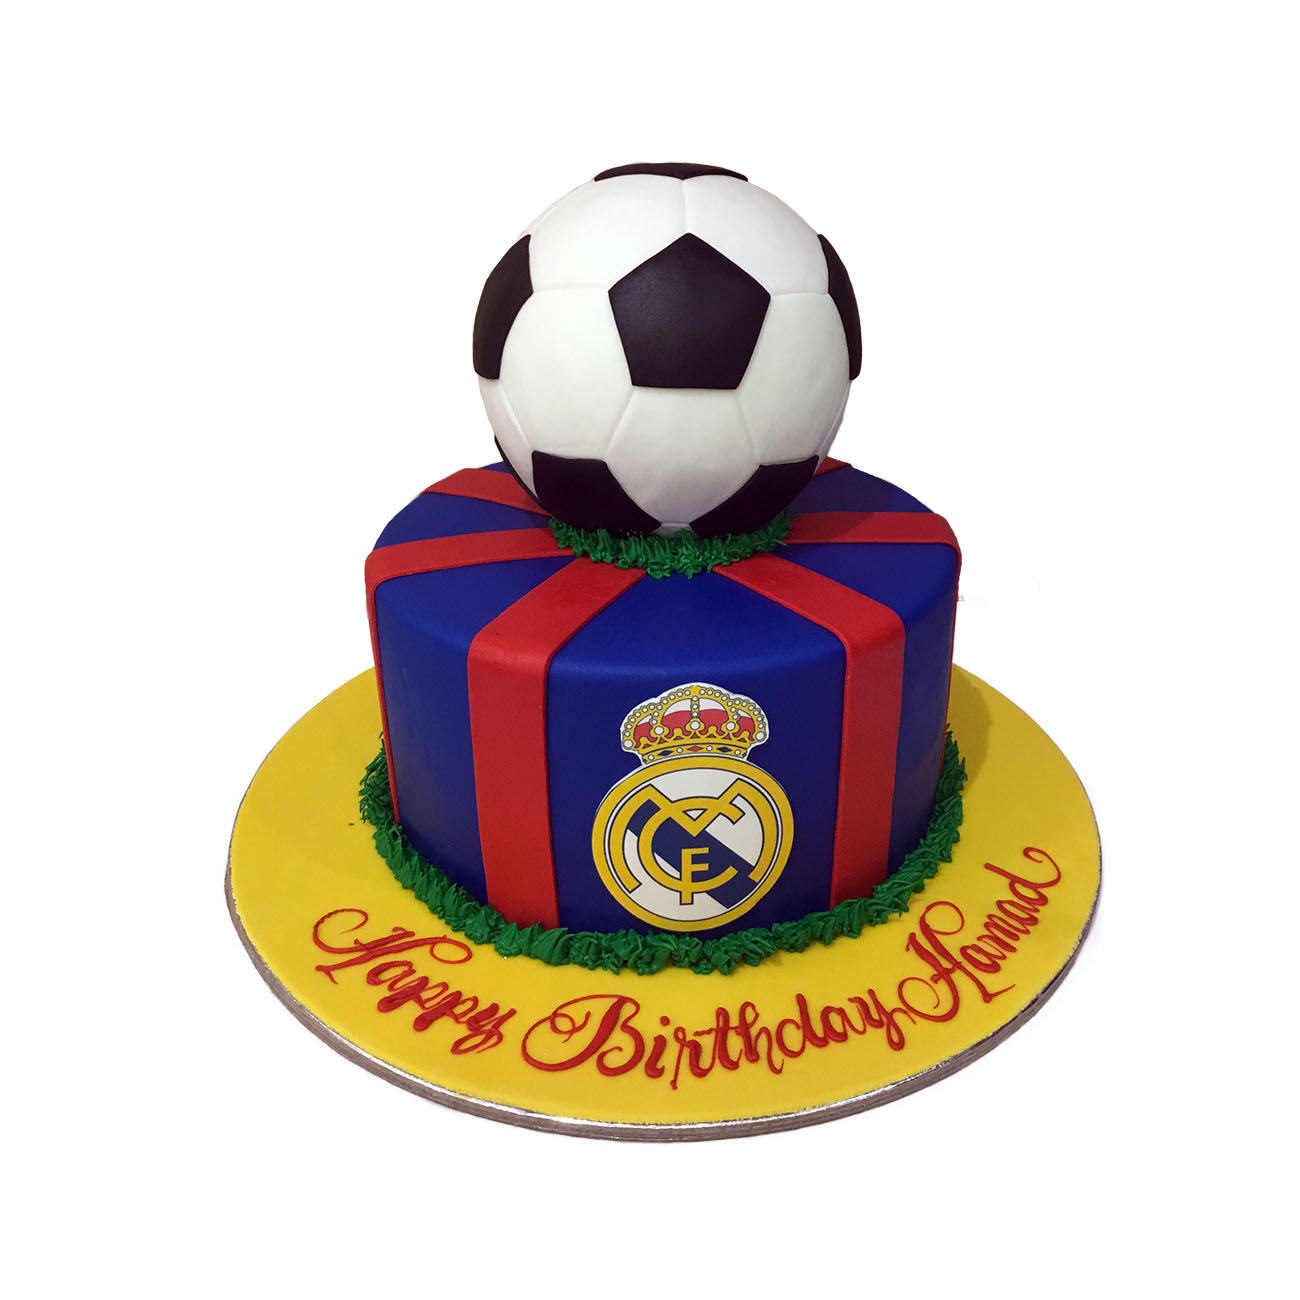 Top Football Cakes - CakeCentral.com